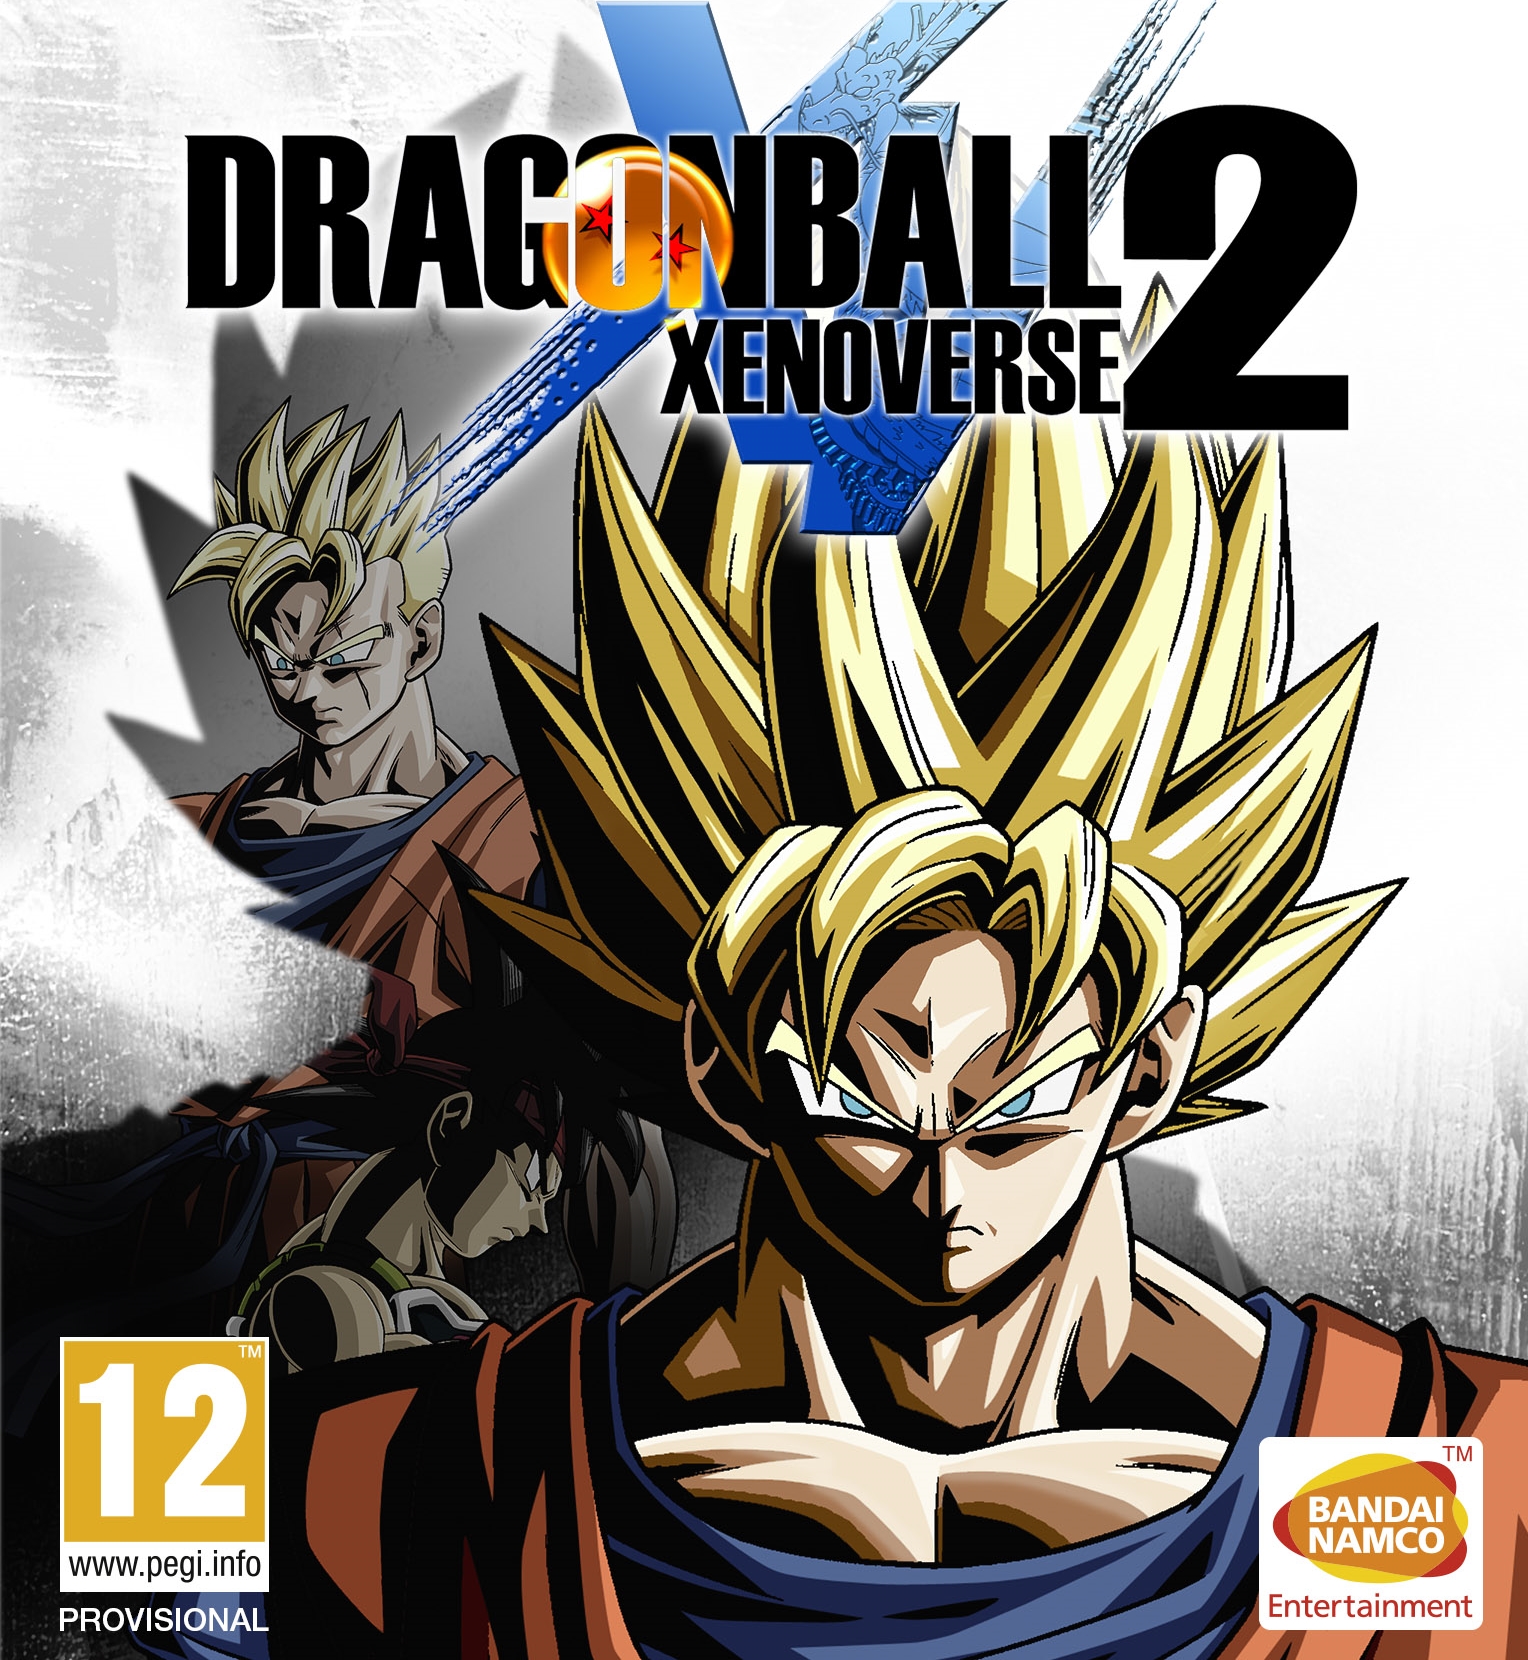 Kaio-ken times two: Dragon Ball Xenoverse 2 review